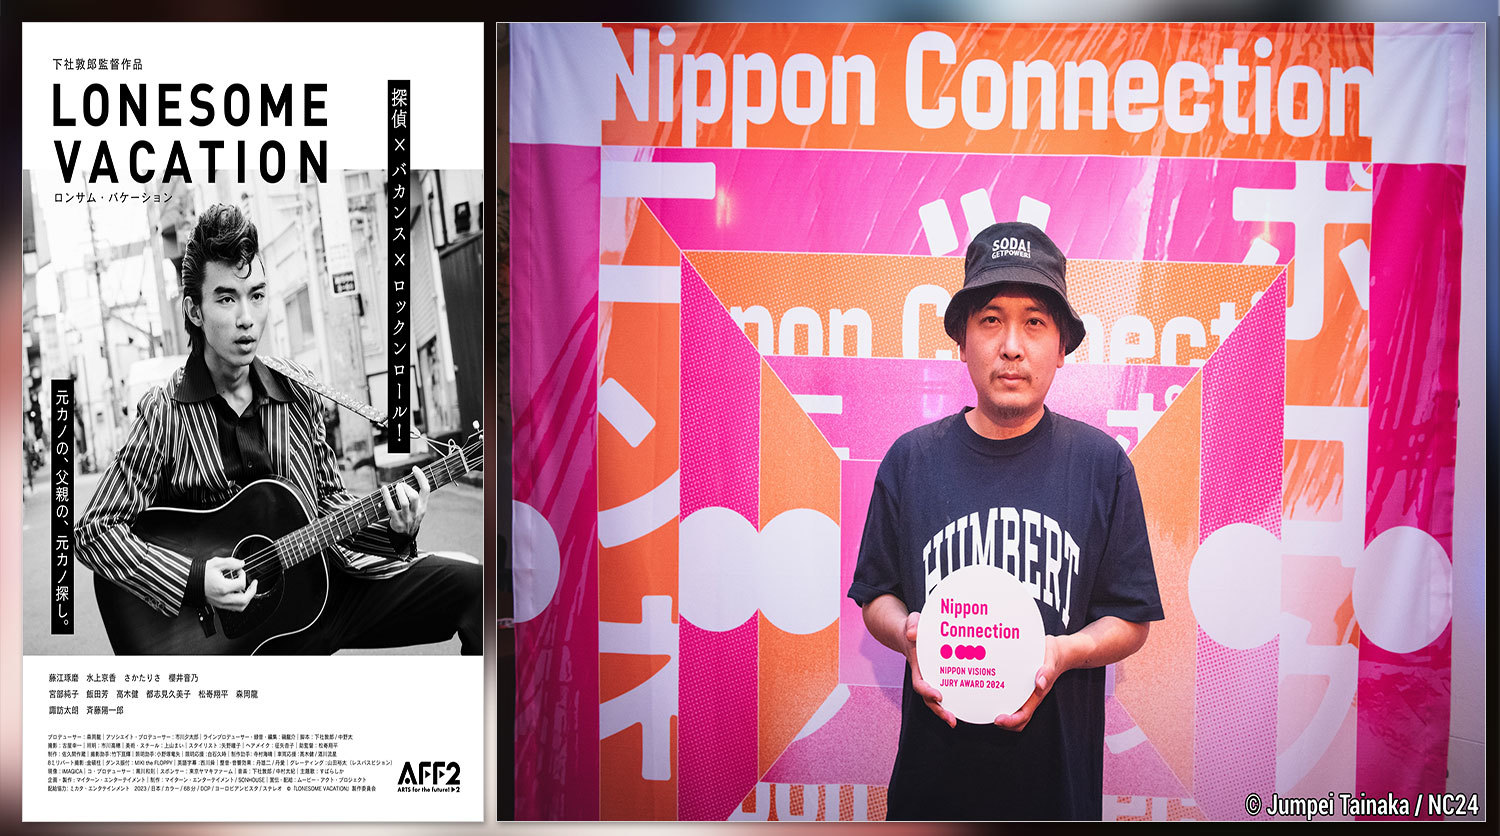 Premios 24 Nippon Connection - Lonesome Vacation film - Atsuro Shimoyashiro